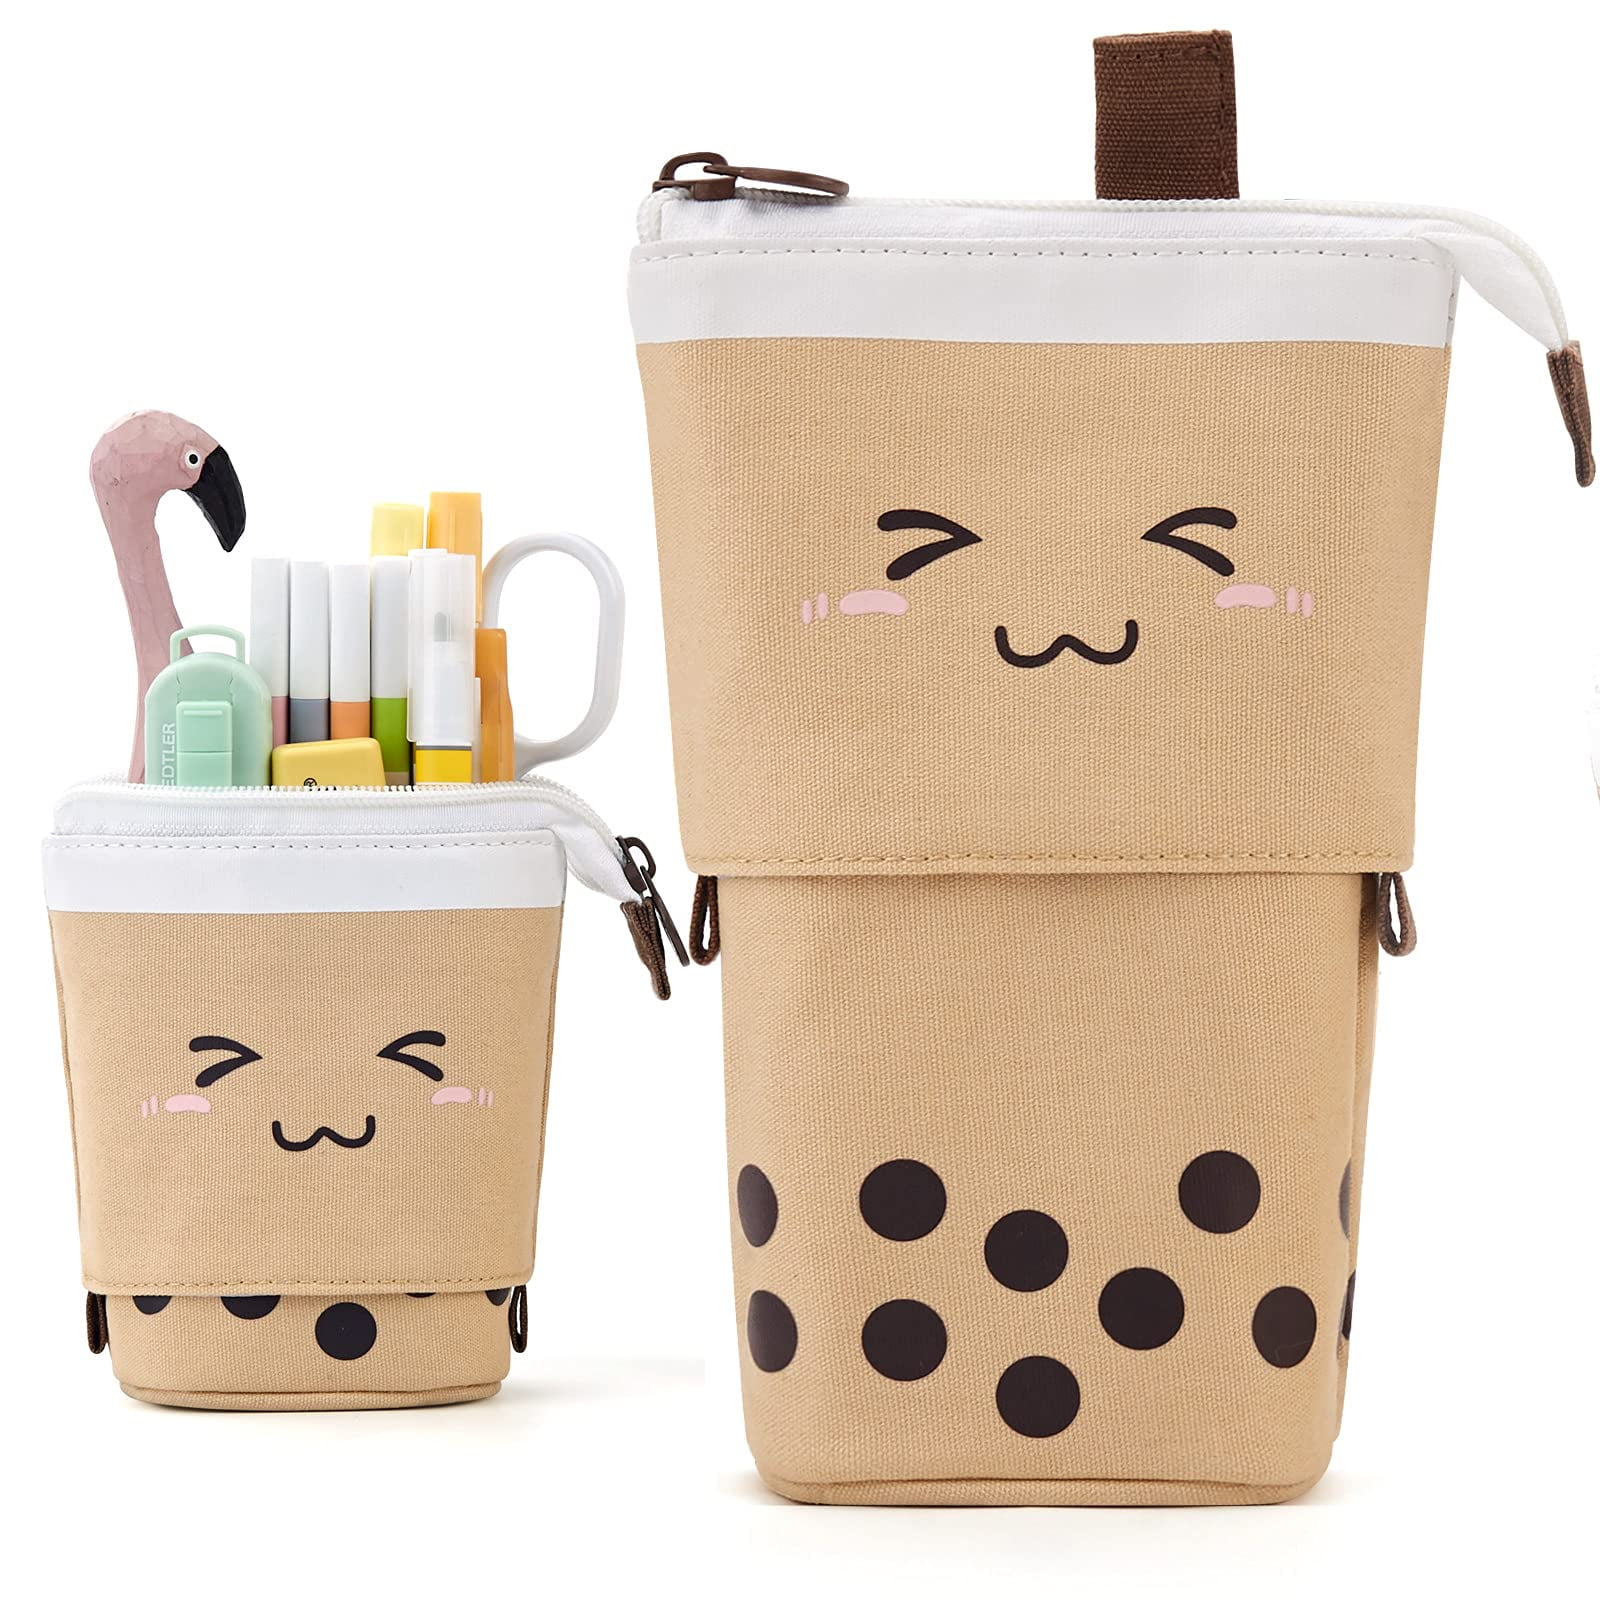 Boba Cute Standing Pencil Case For Kids, Pop Up Pencil Box Makeup Pouch,  Stand Up Bubble Tea Pen Holder Organizer Cosmetics Bag, Kawaii Stationary  (pu